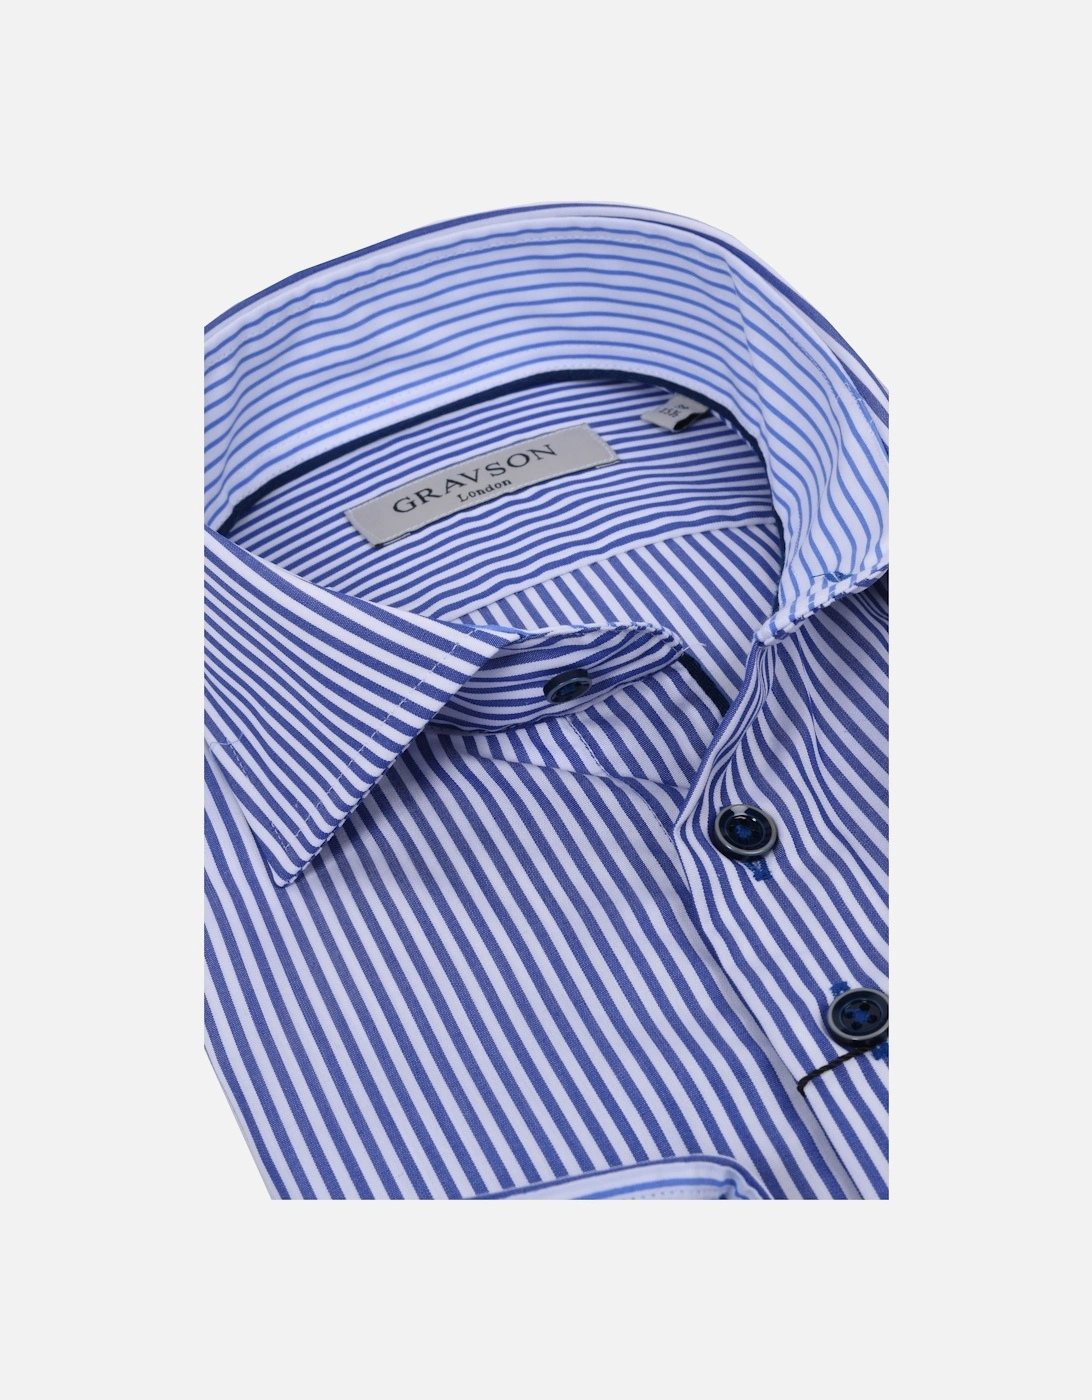 Blue & White Stripe Shirt